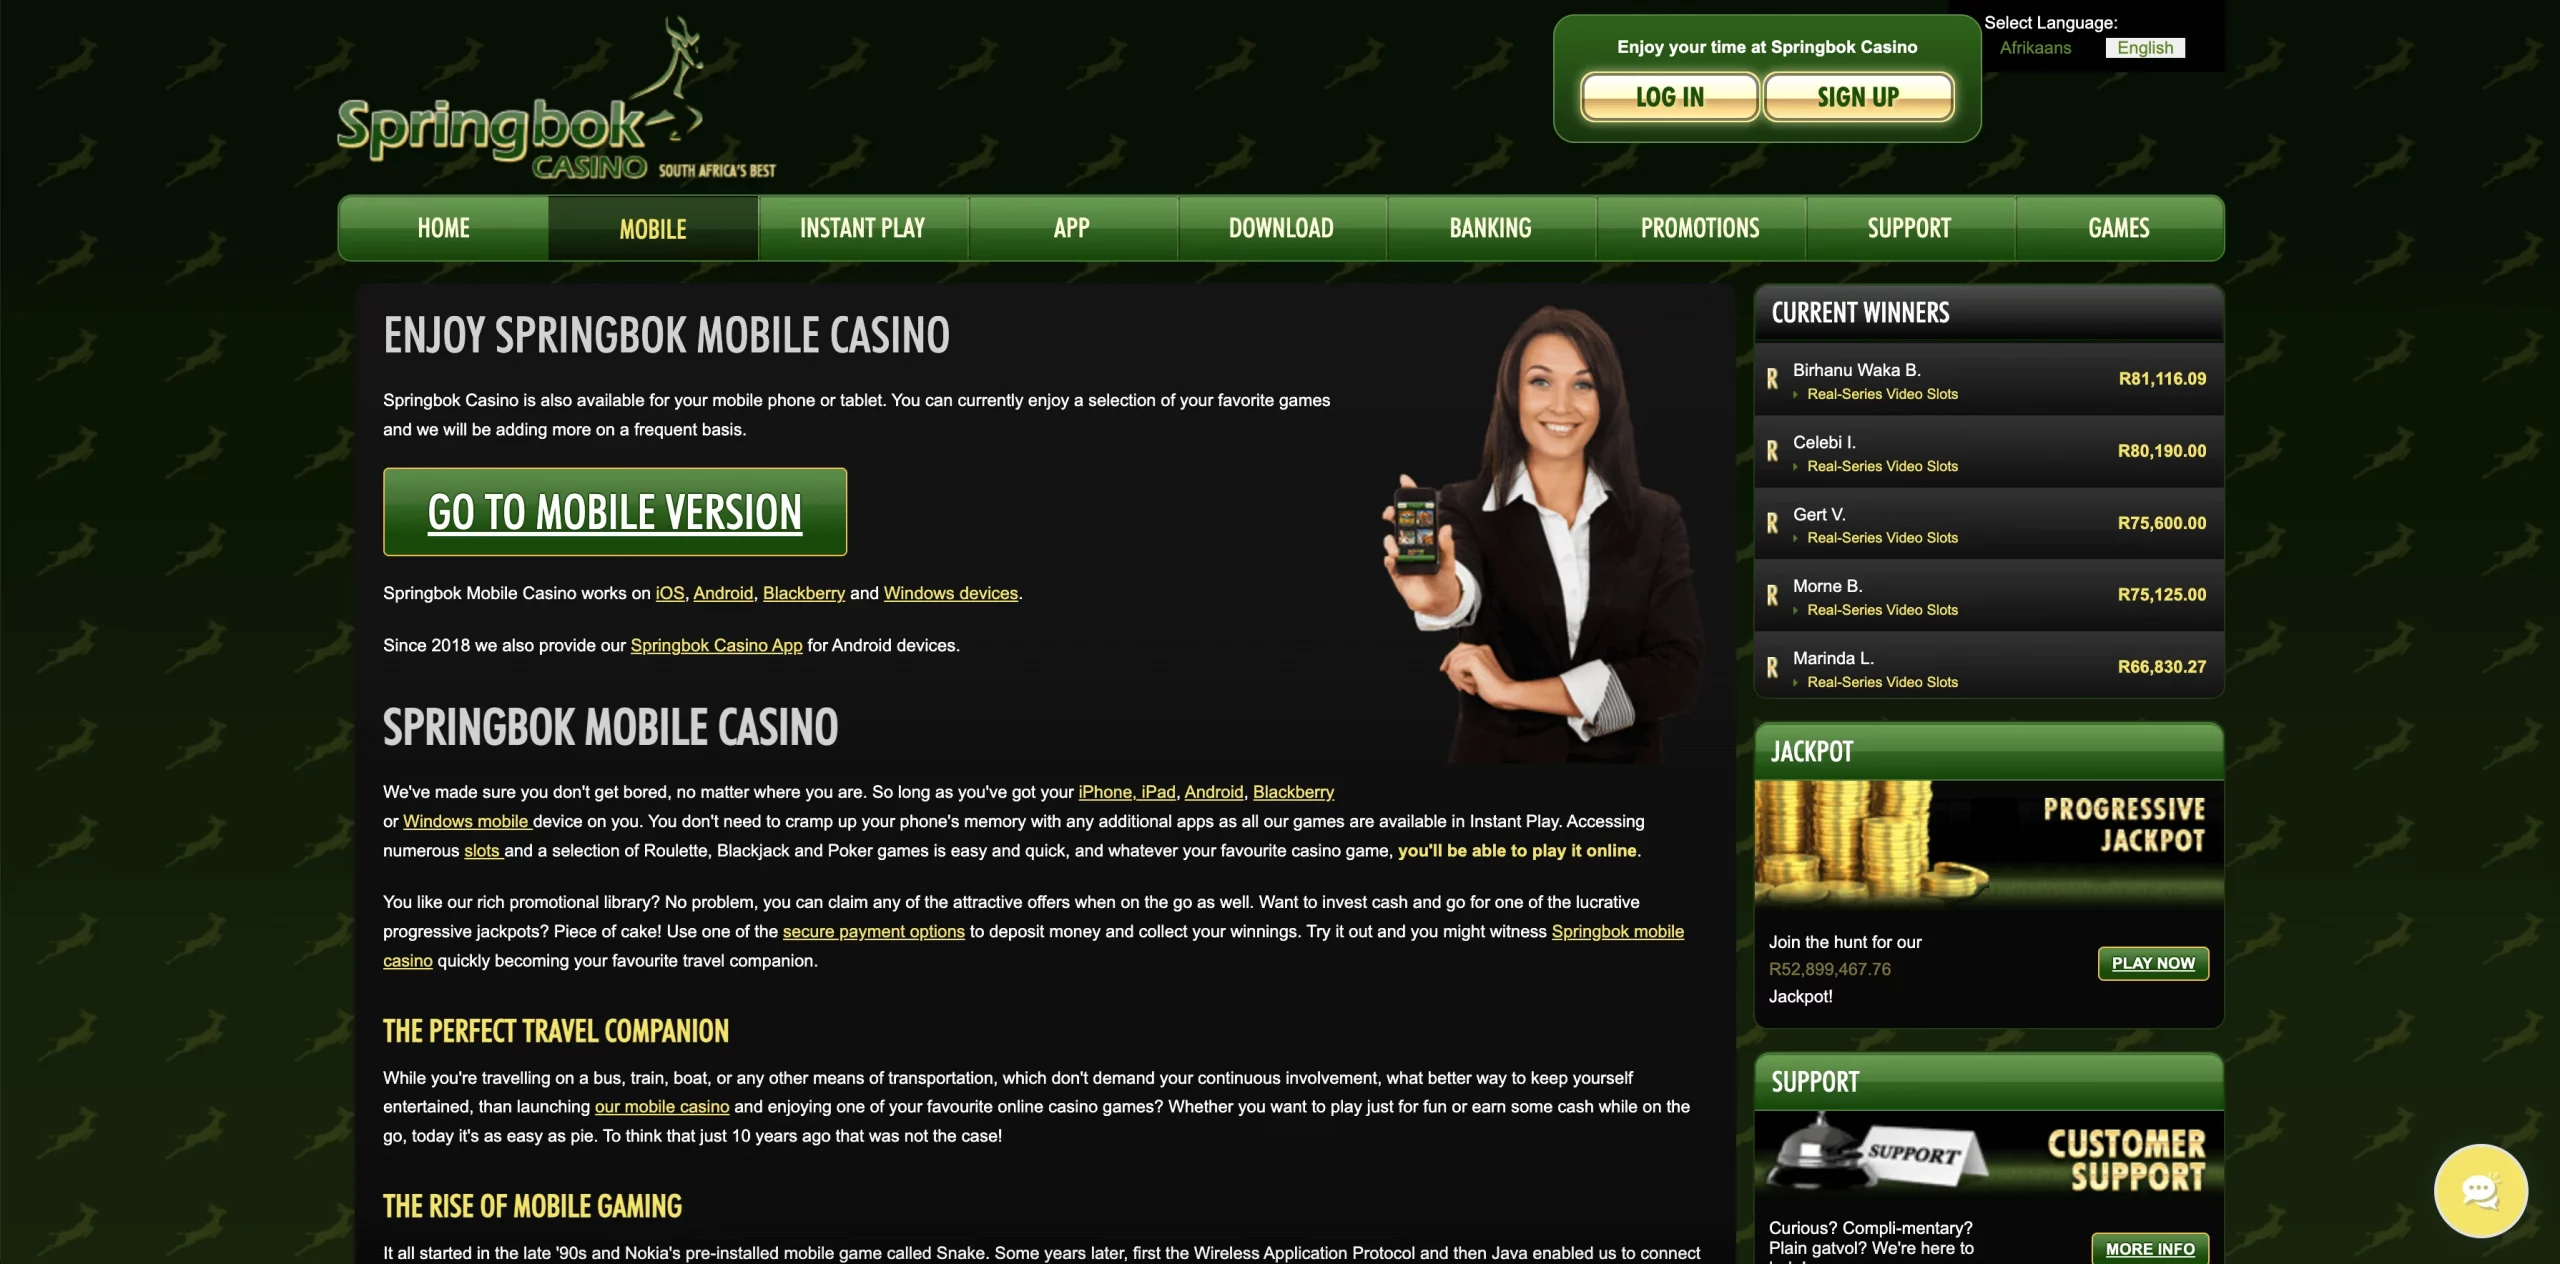 Springbok Casino Singapore mobile app